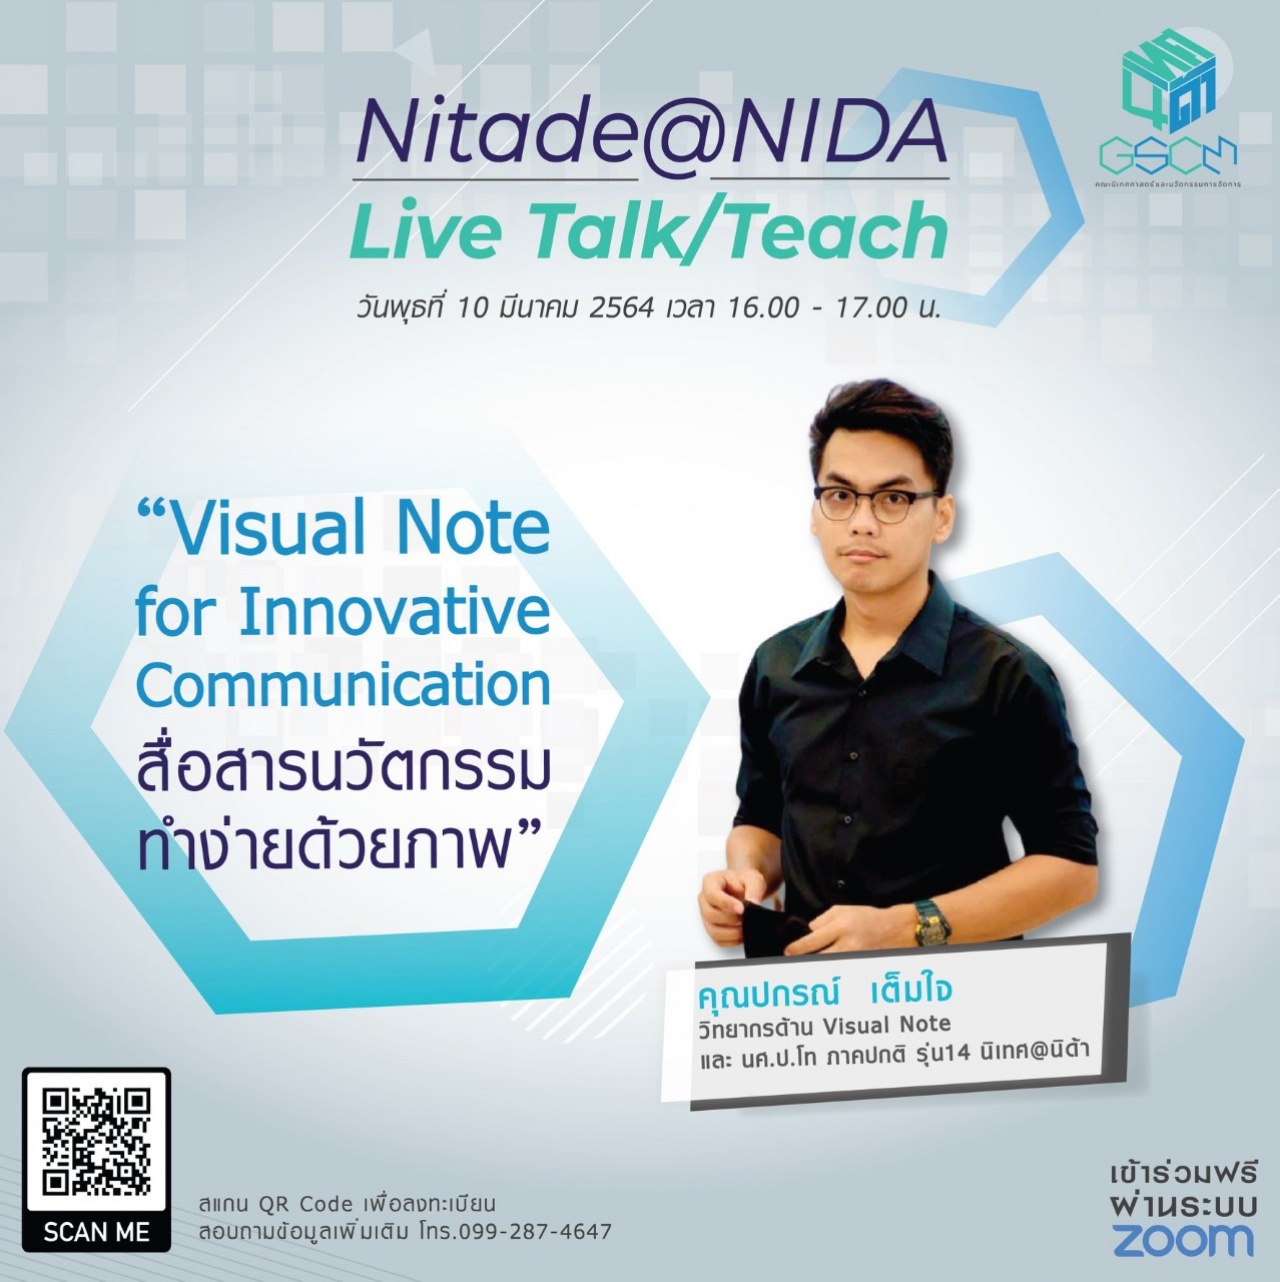 Nitade@NIDA Live Talk/Teach ในหัวข้อ "Visual Note for Innovative Communication สื่อสารนวัตกรรม ทำง่ายด้วยภาพ"